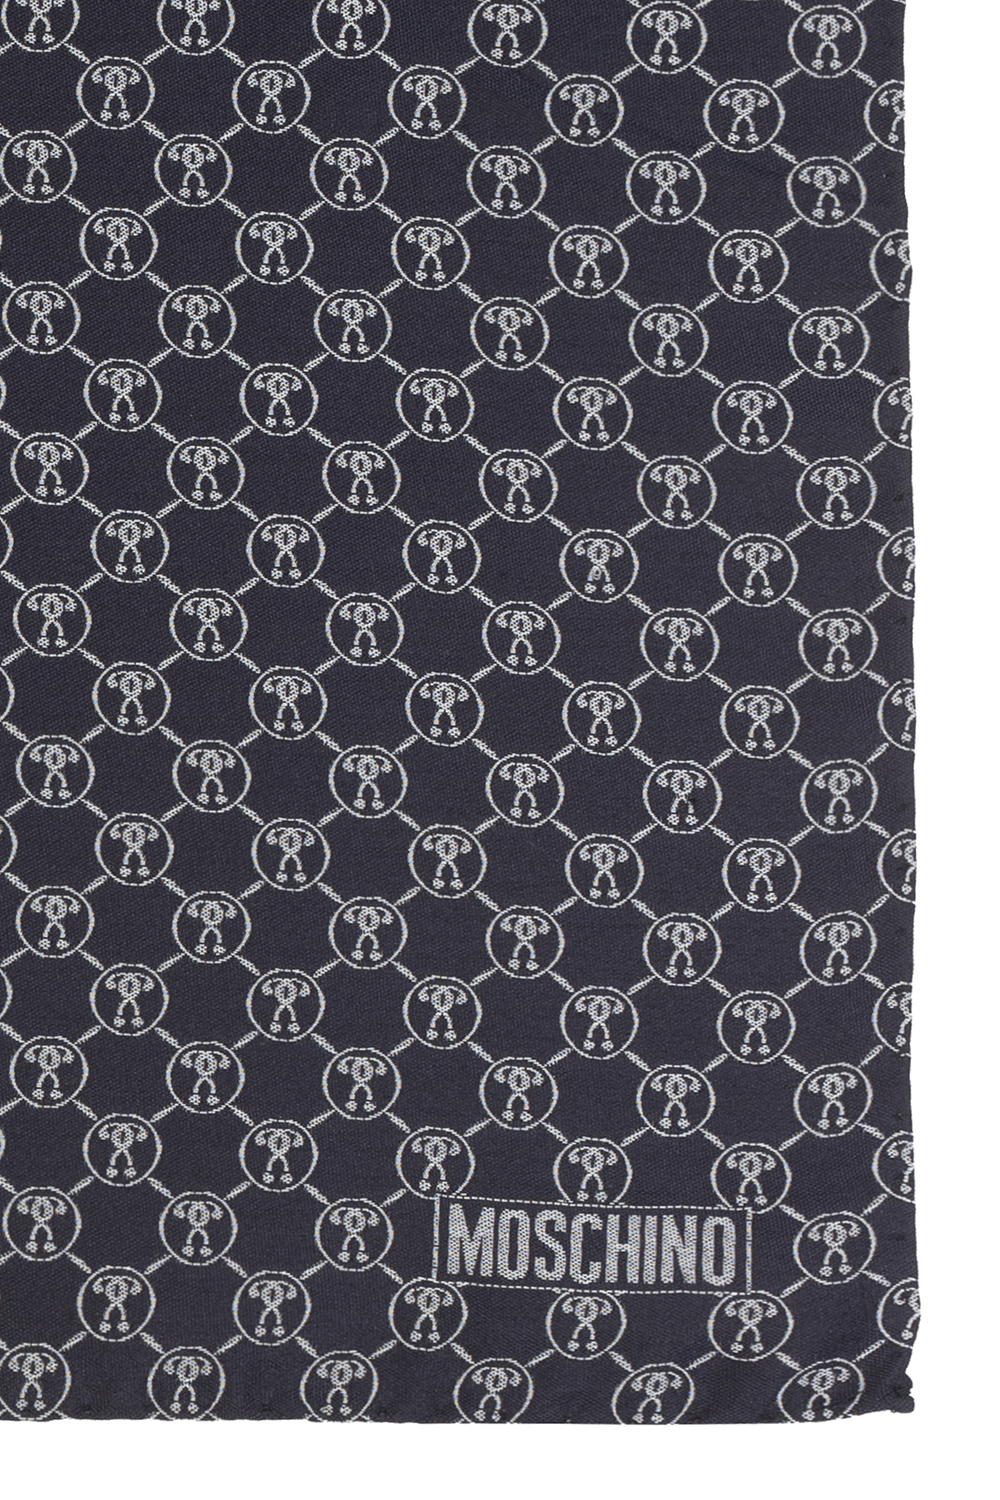 Moschino Pocket square with logo